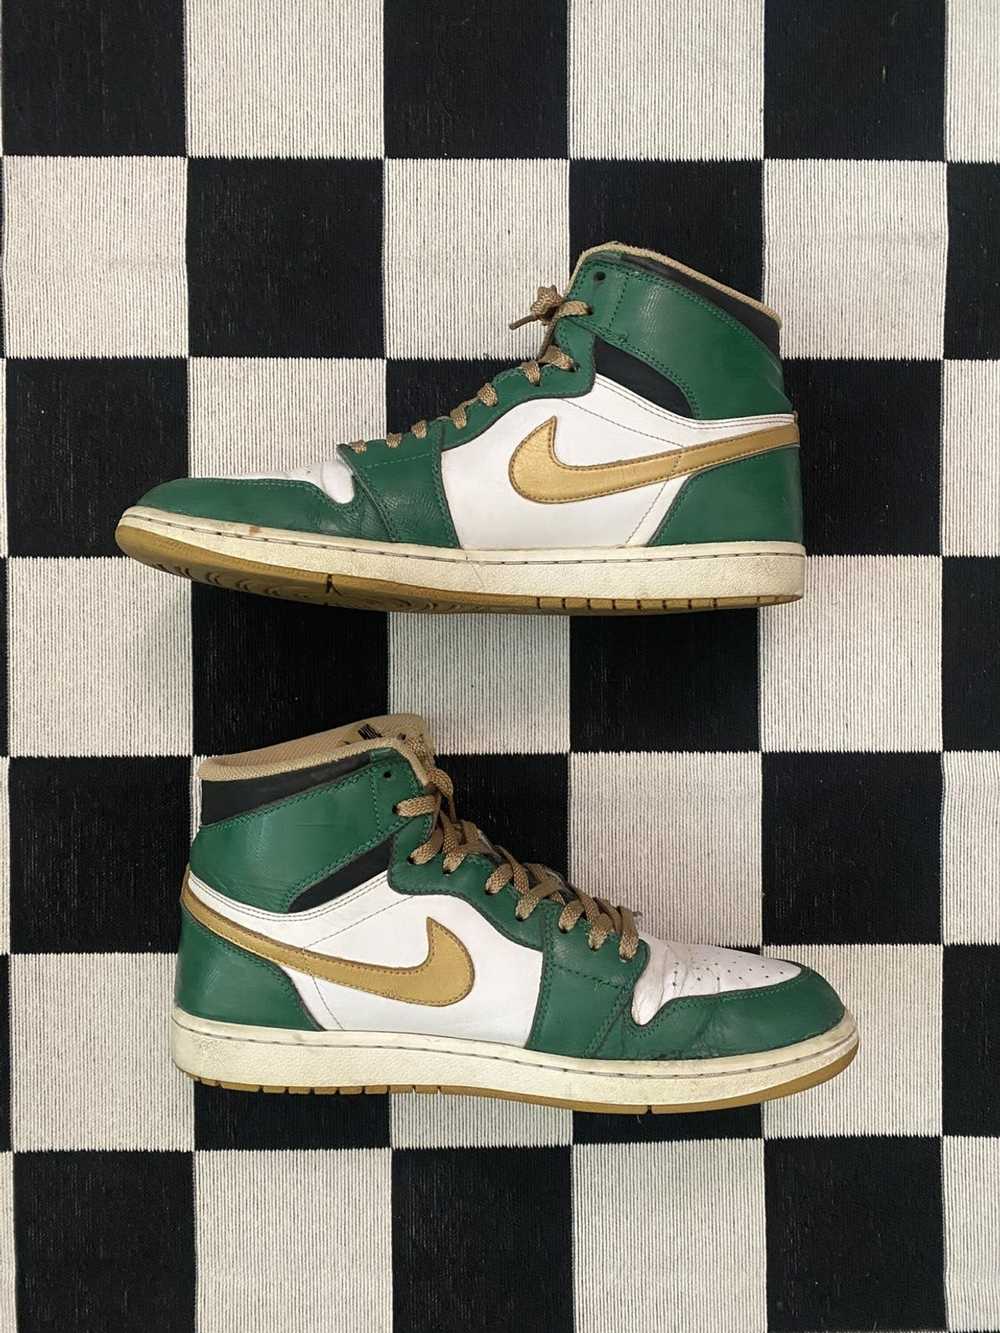 Jordan Brand Jordan 1 High “Celtics” - image 2